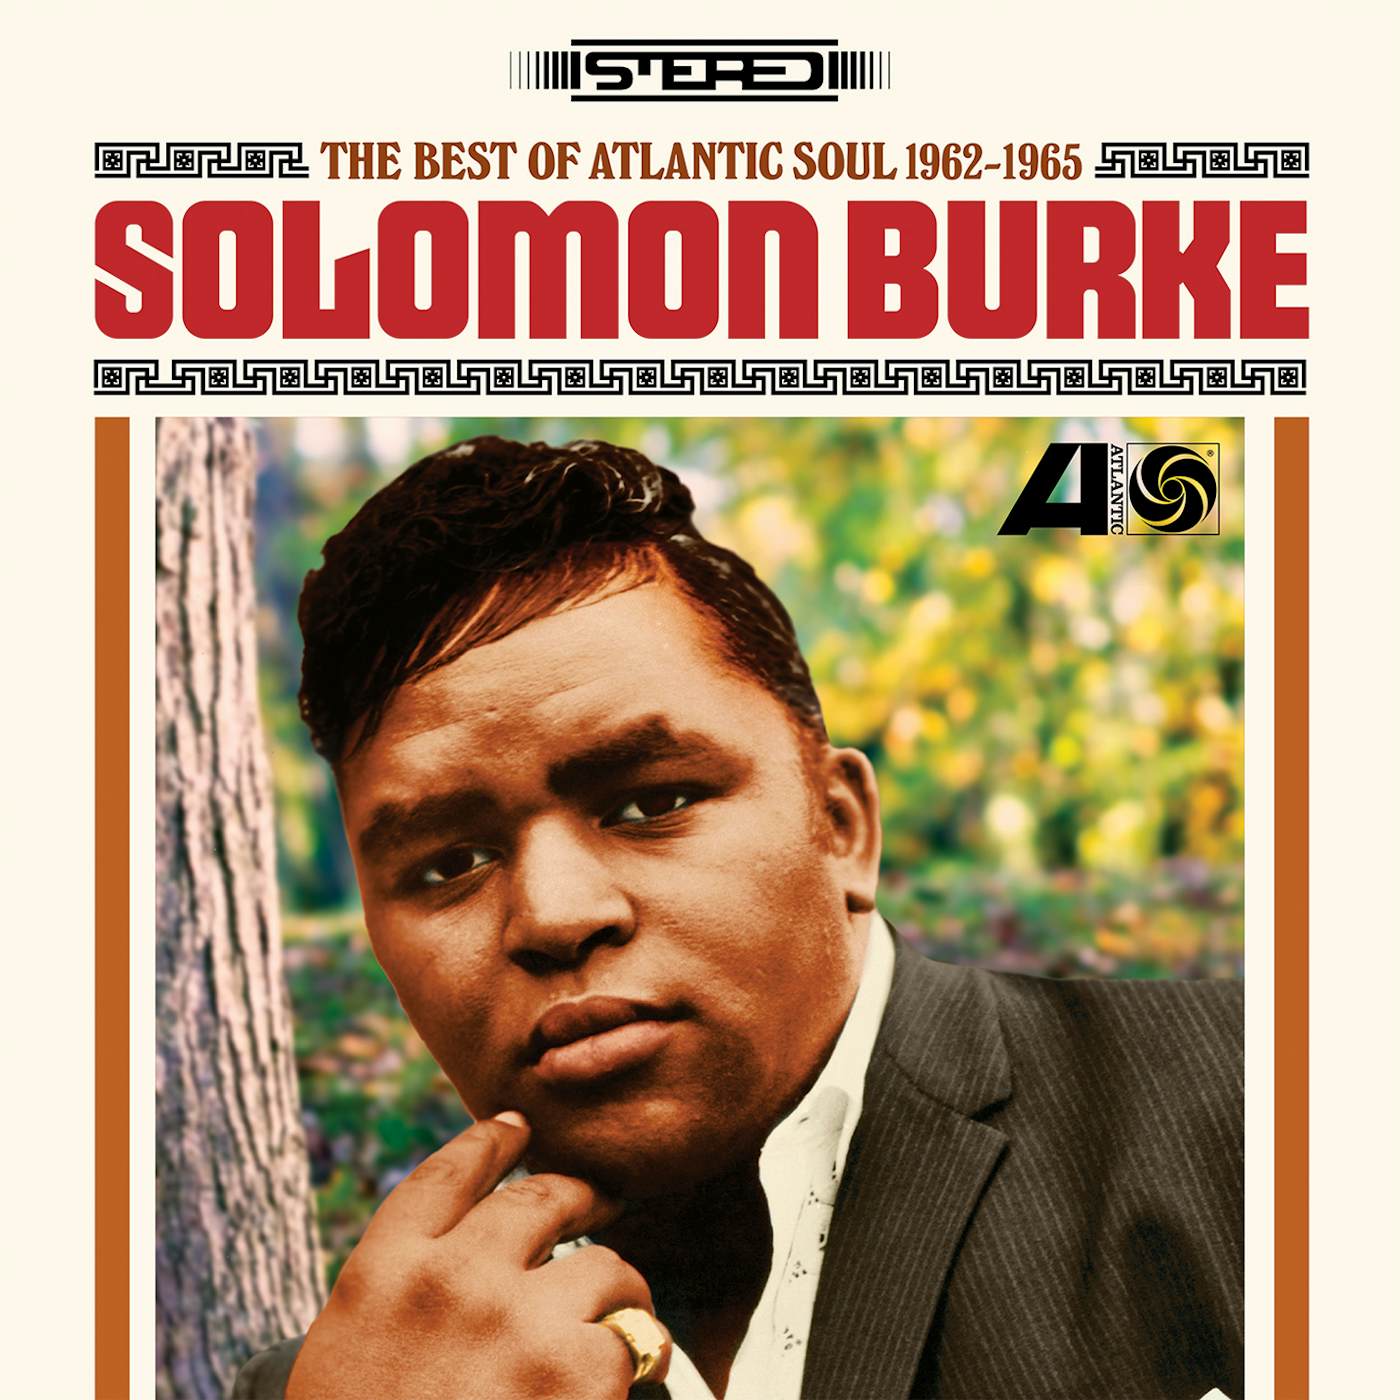 Solomon Burke BEST OF ATLANTIC SOUL 1962-1965 Vinyl Record